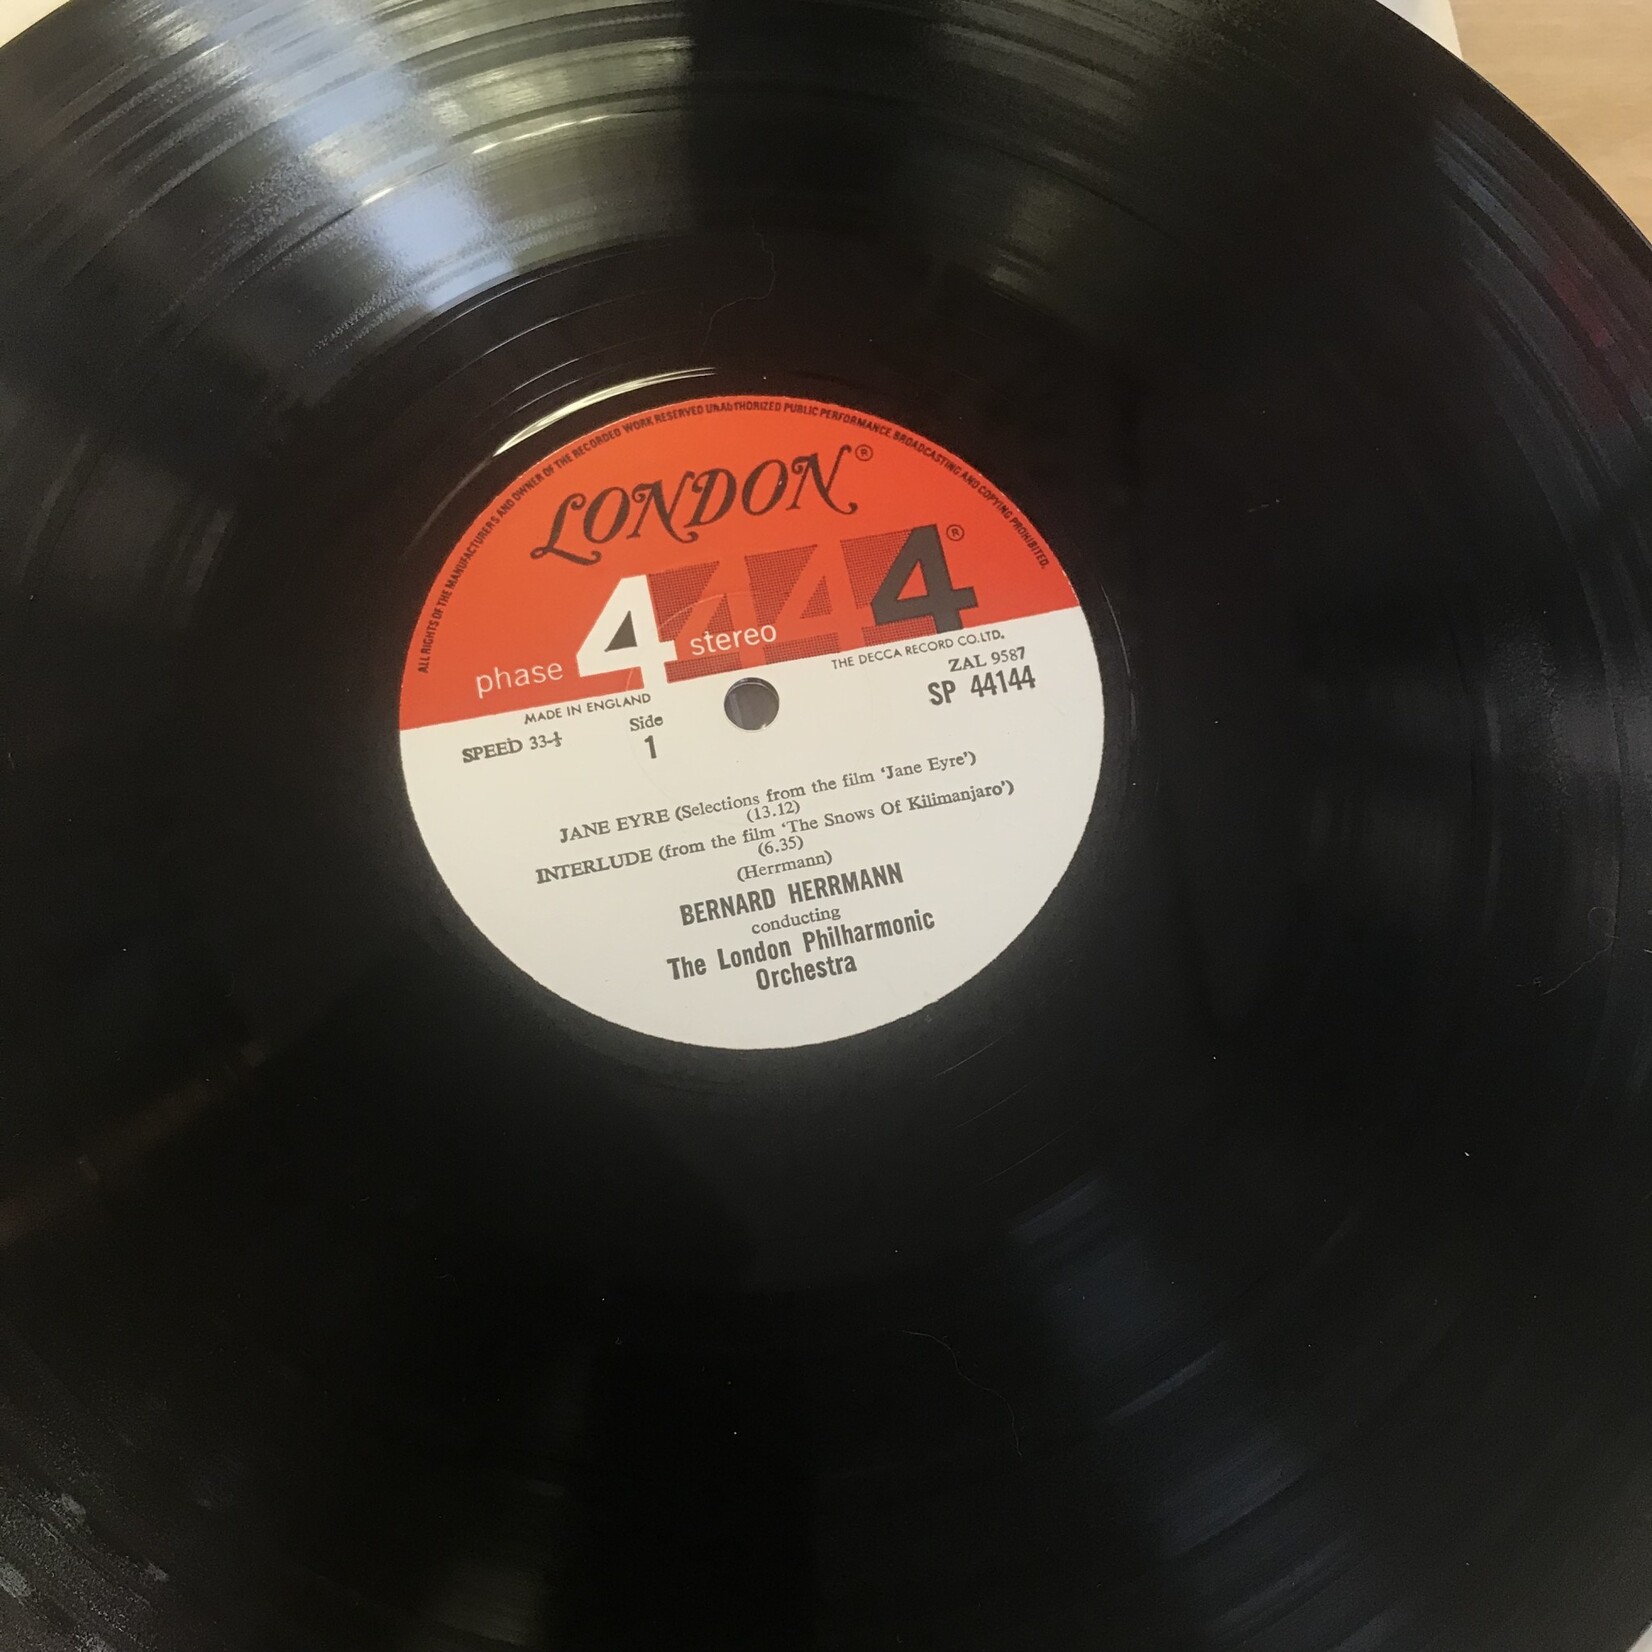 Bernard Herrmann - Music From Great Film Classics - SP 44144 - Vinyl LP (USED)